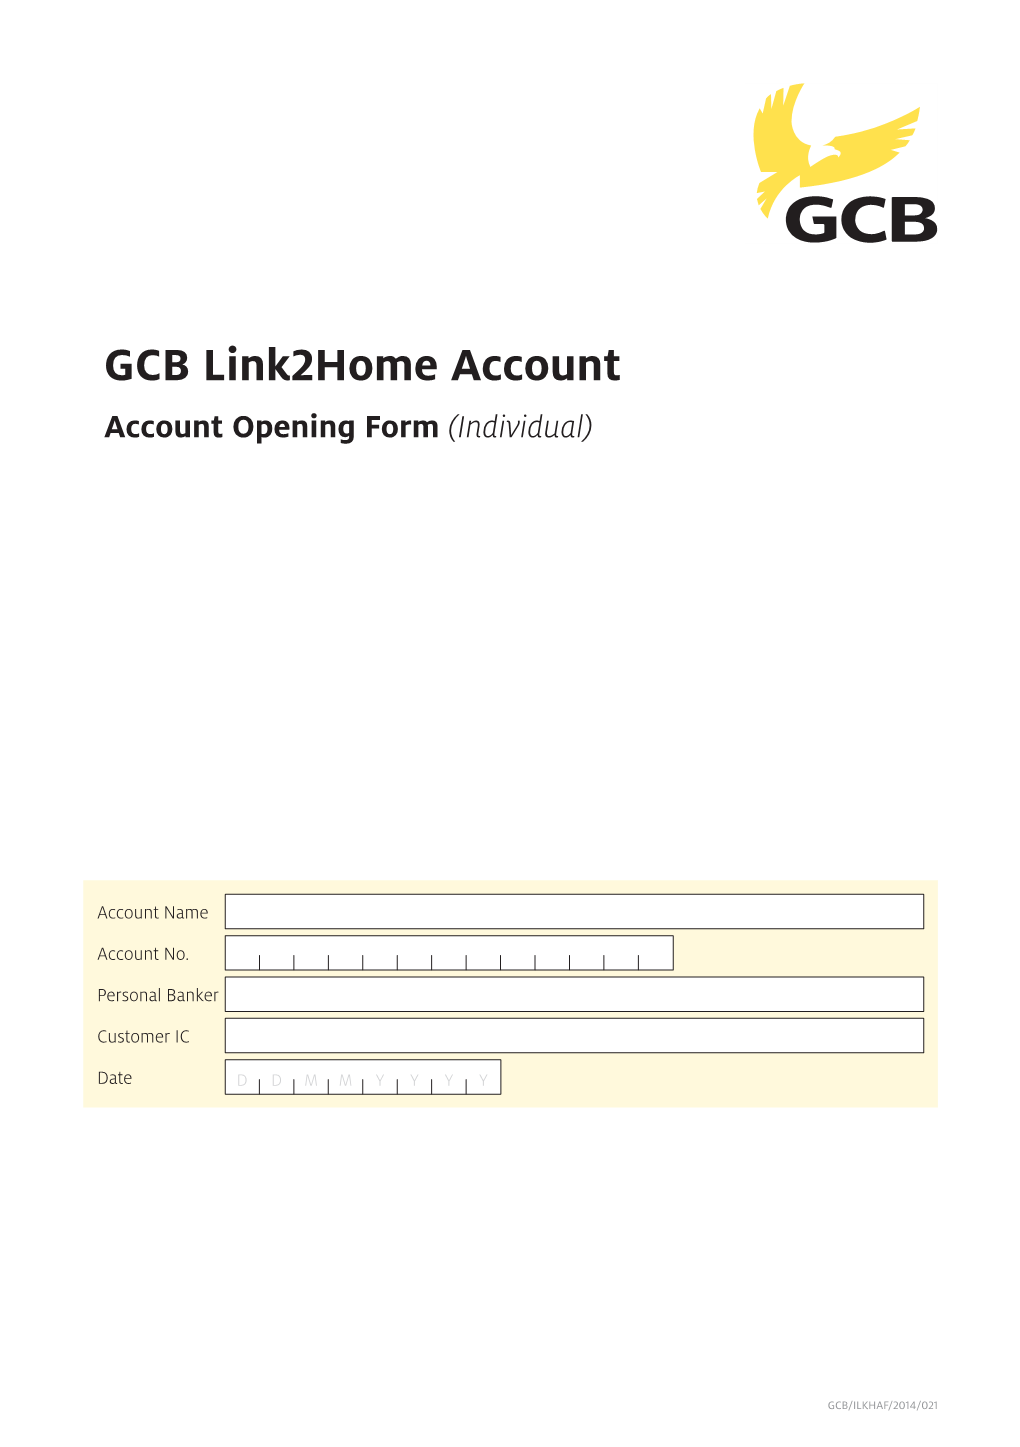 GCB-New-Account-Opening-Form-Individual